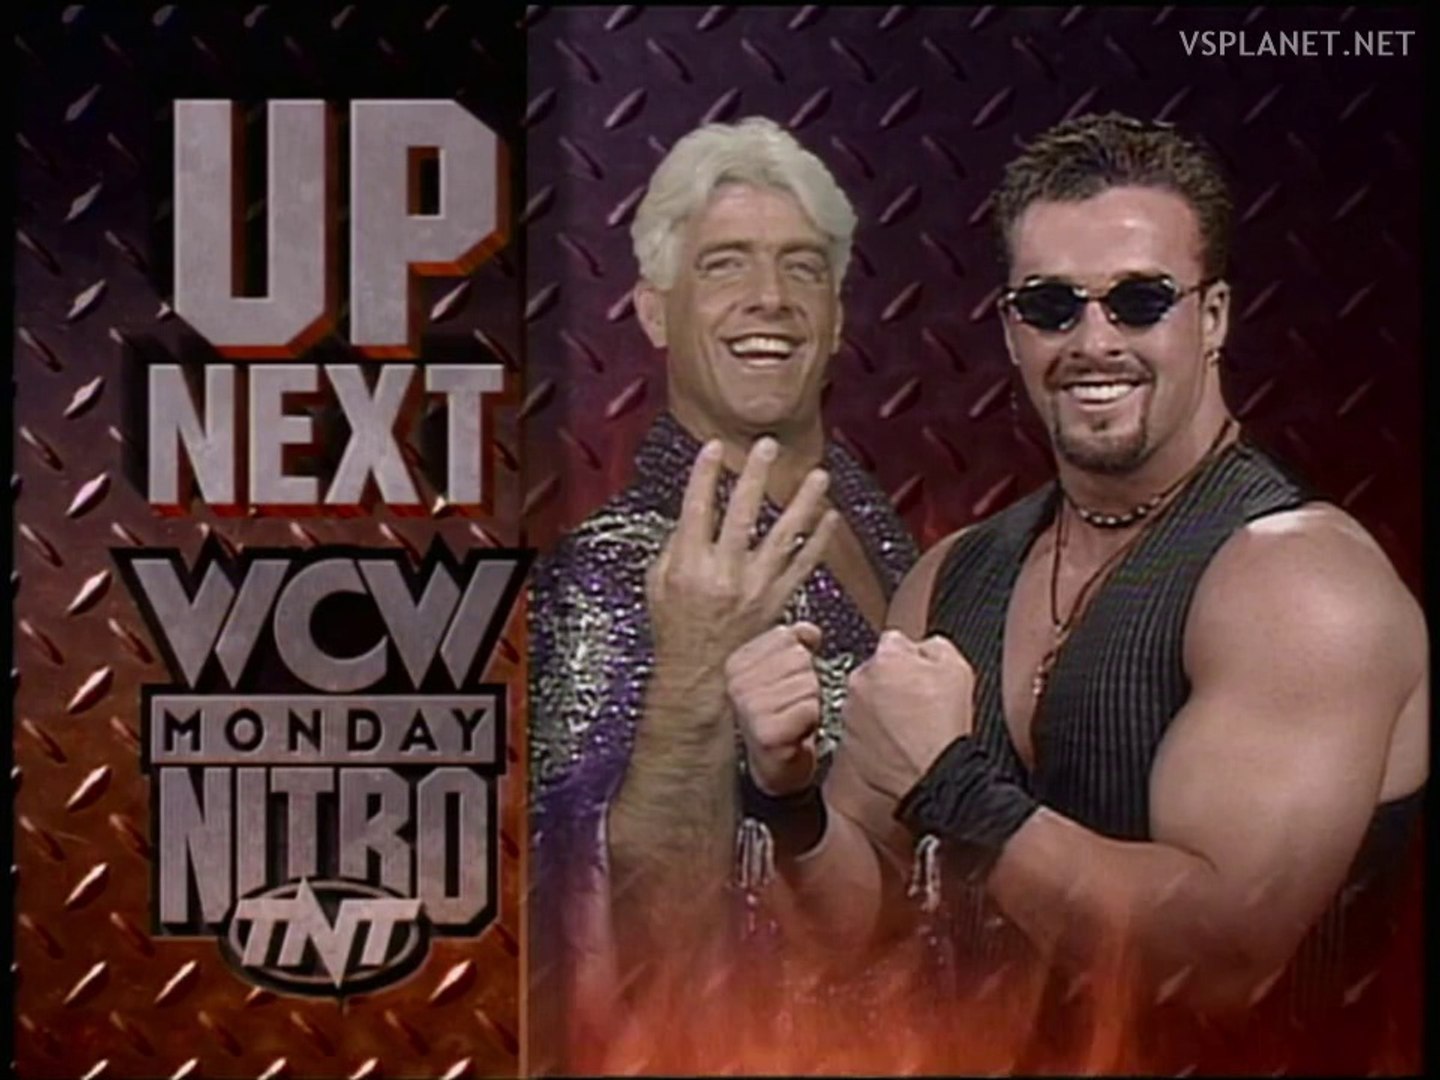 Ric Flair vs Buff Bagwell, WCW Monday Nitro 05.02.1996 - video Dailymotion